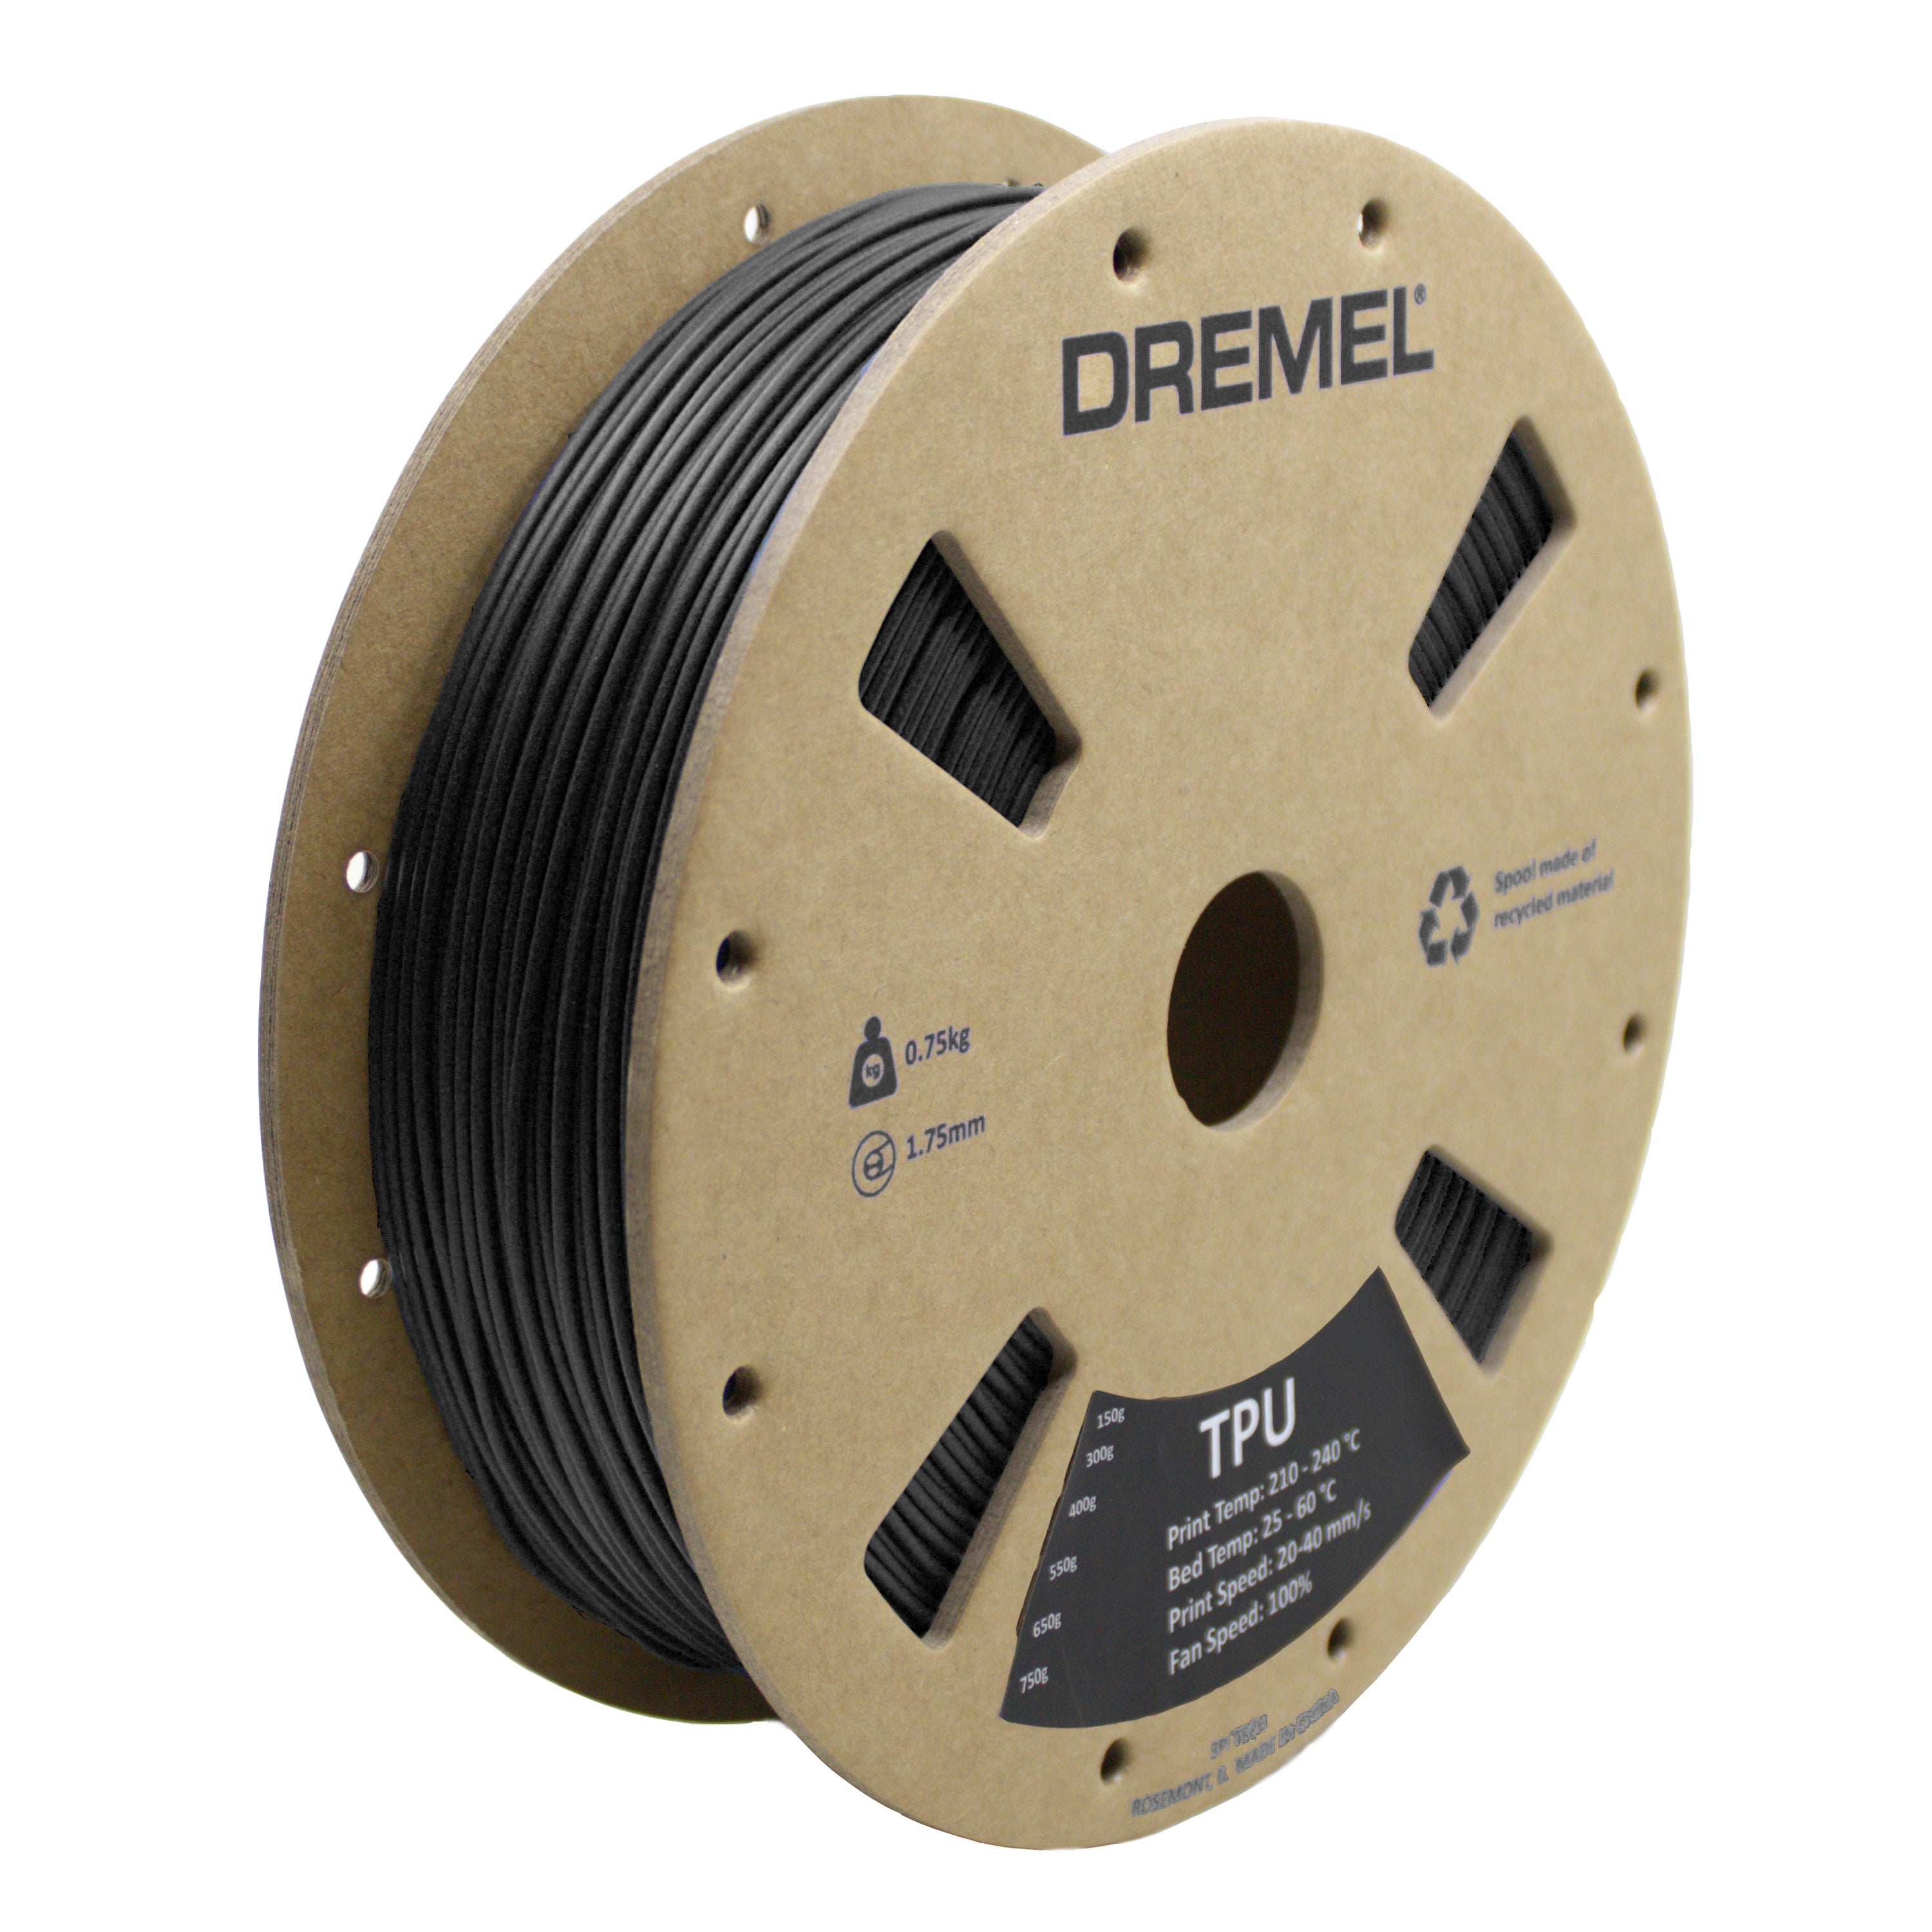 3D TPU Filament Spool, 1.75mm Diameter, Black 0.75kg – 3PI Tech Solutions